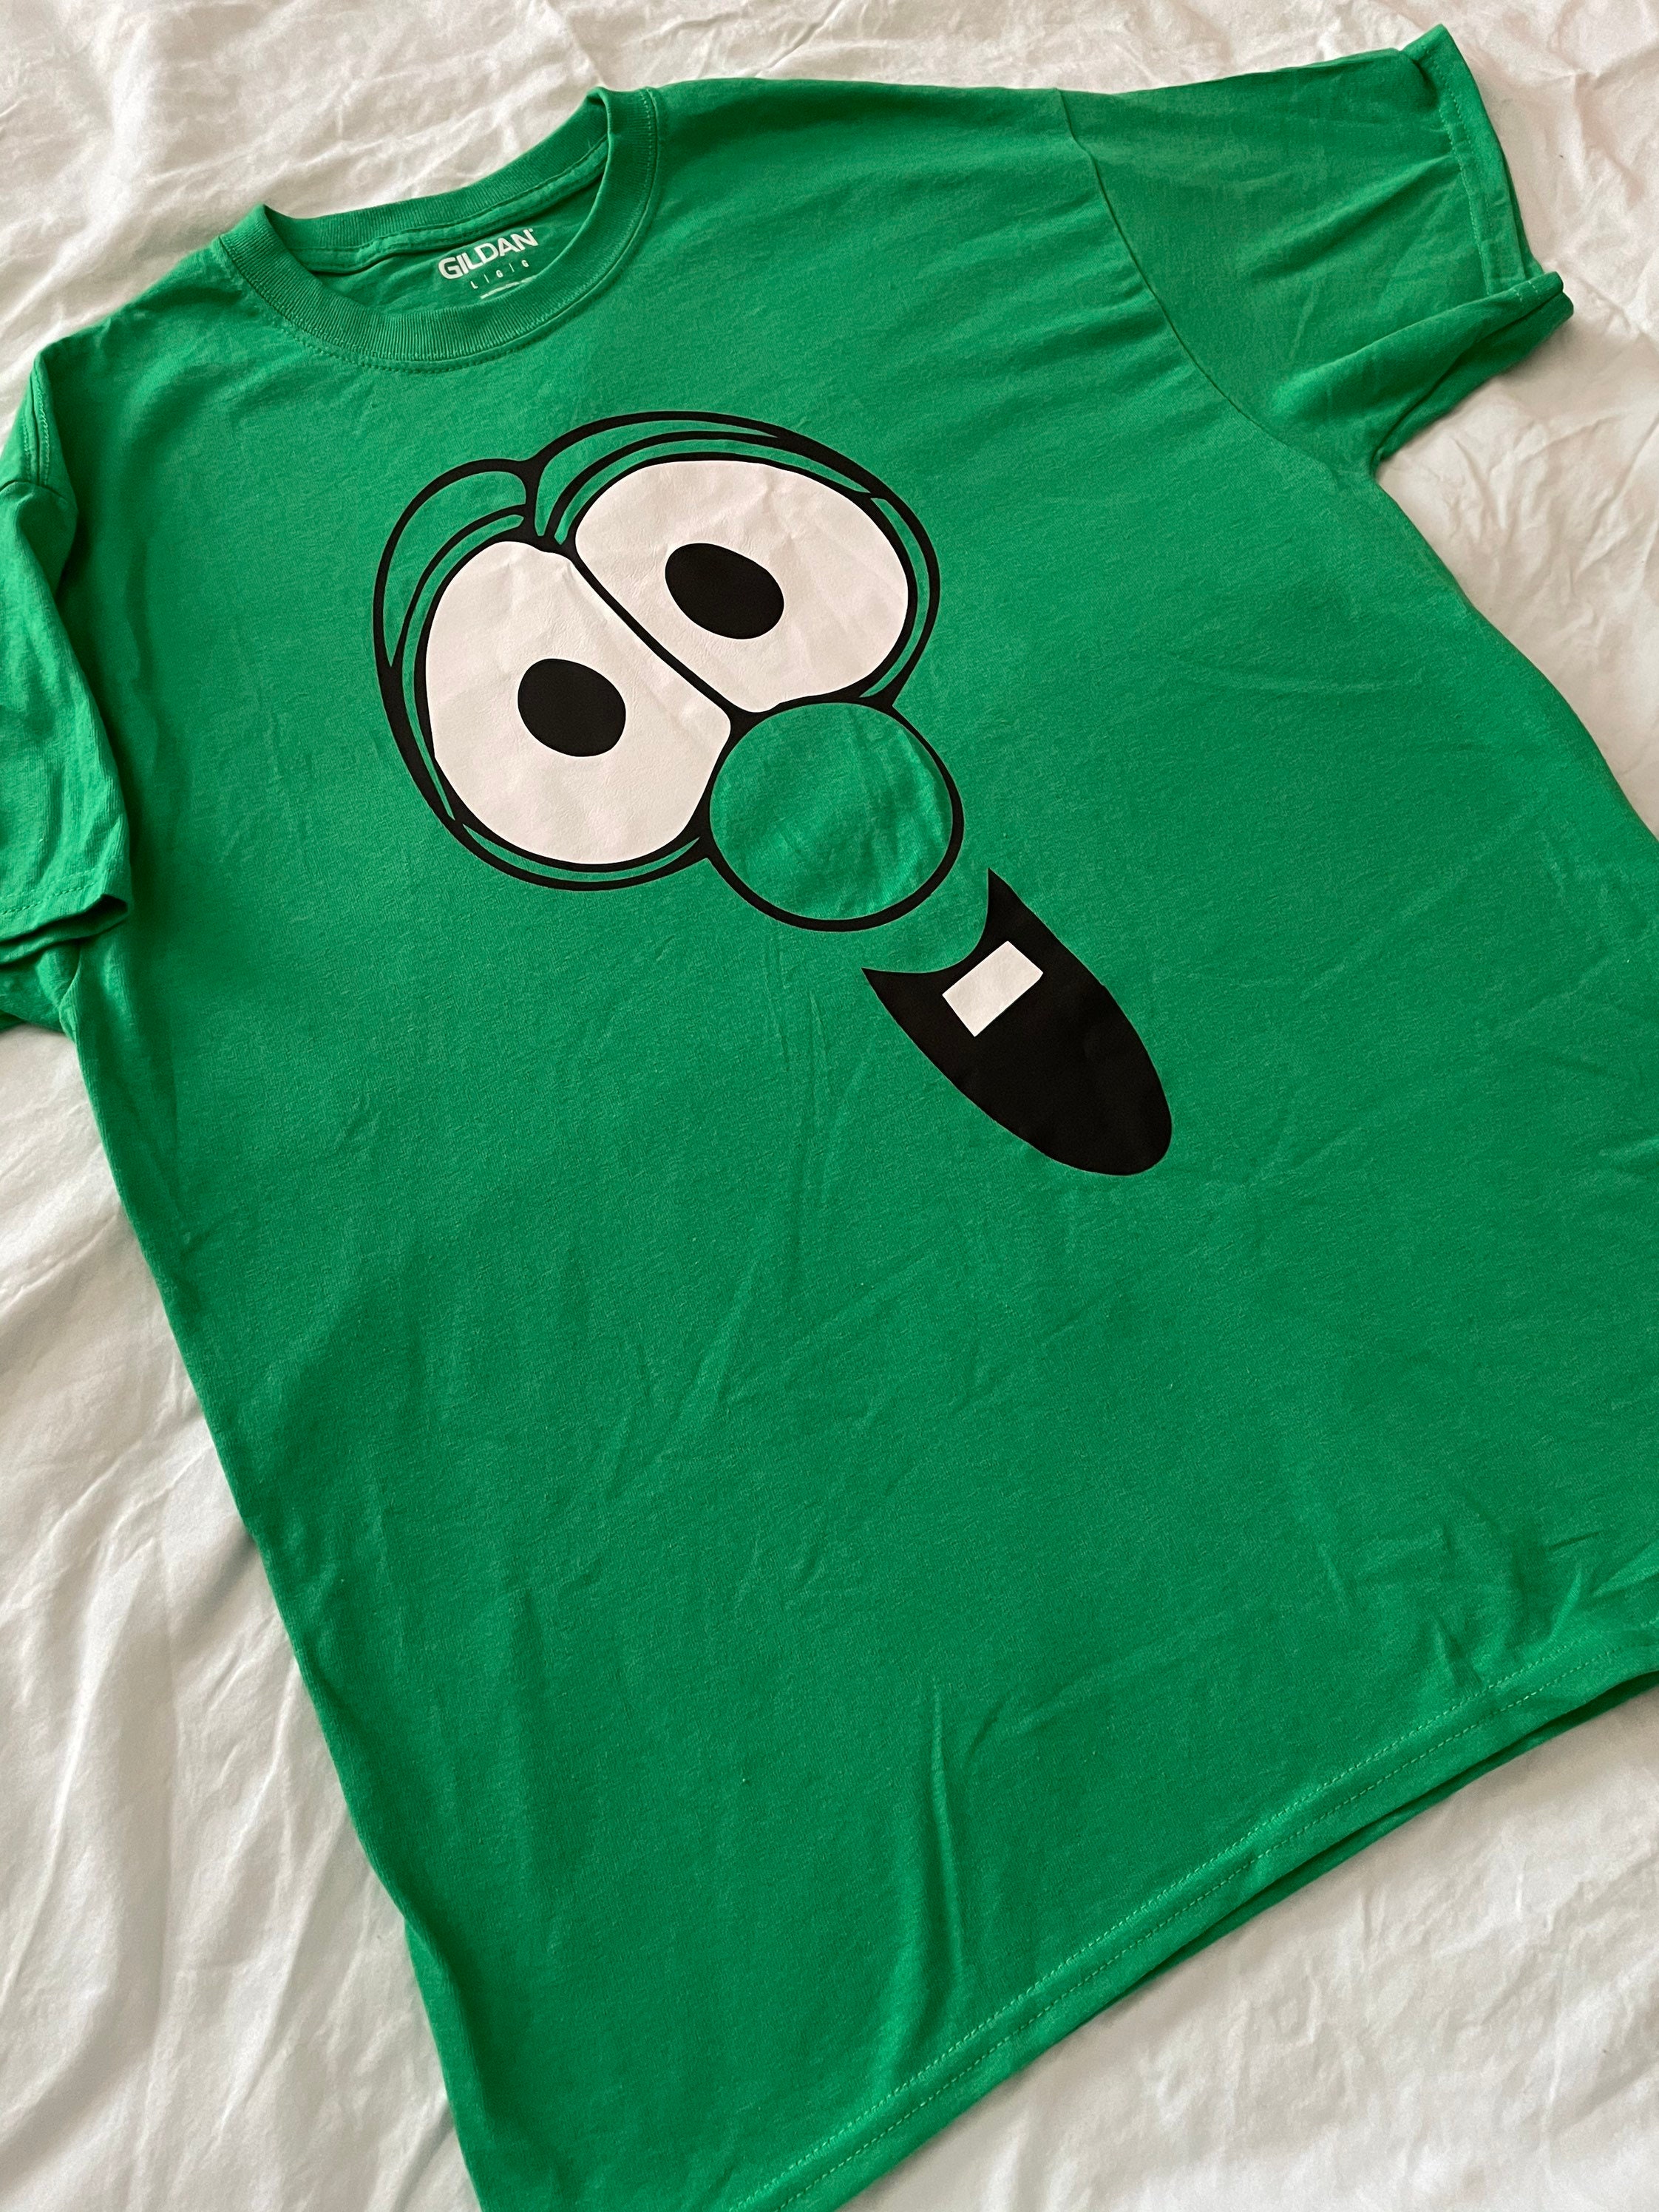 Larry the Cucumber Shirt | Etsy